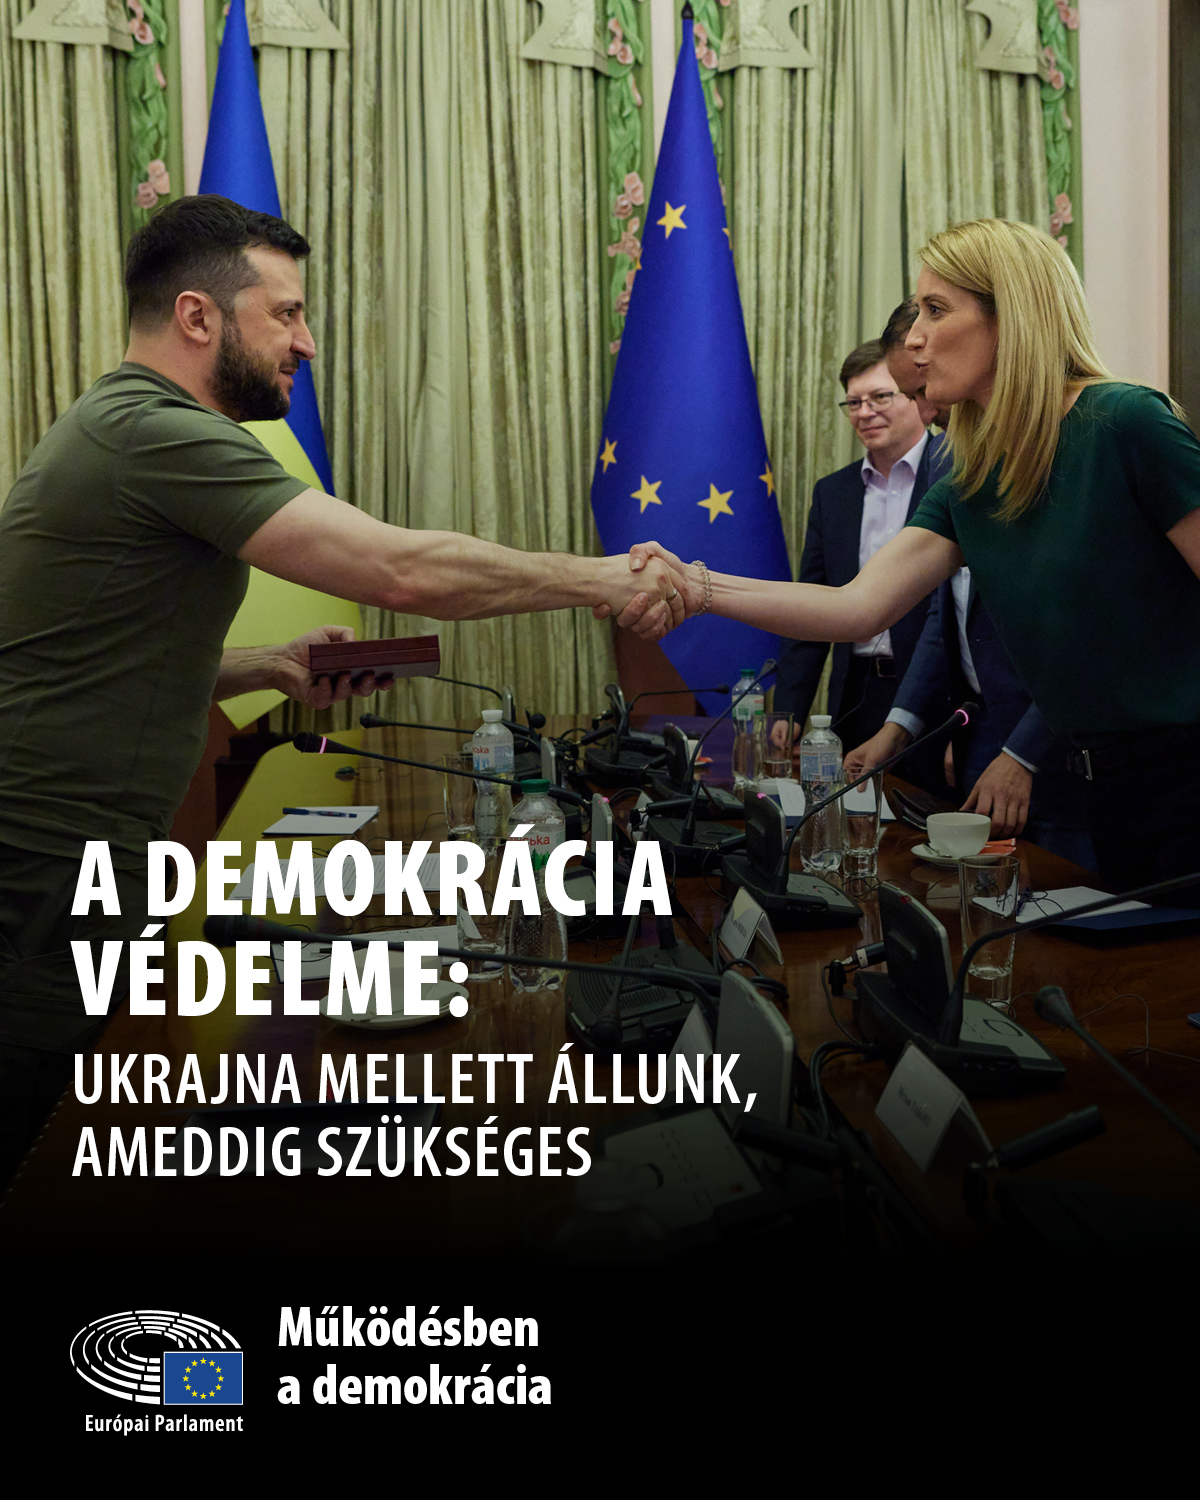 Defending Democracy: Ukraine 1 - 4:5